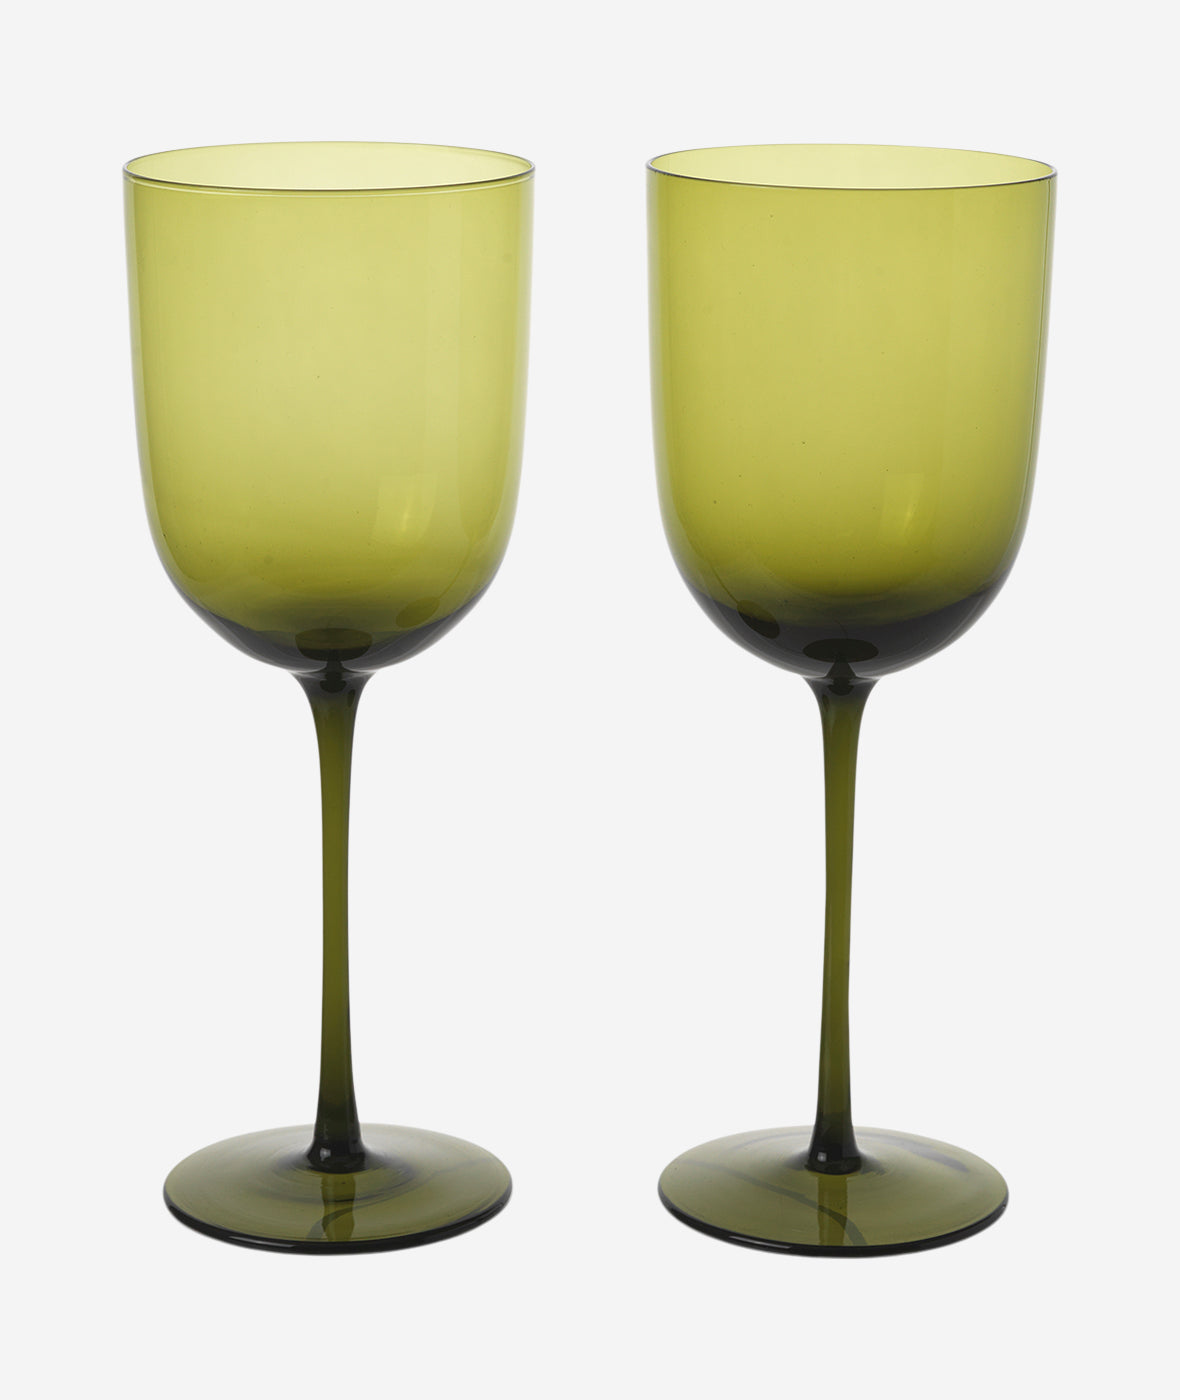 Host Wine Glass Set/2 - More Options